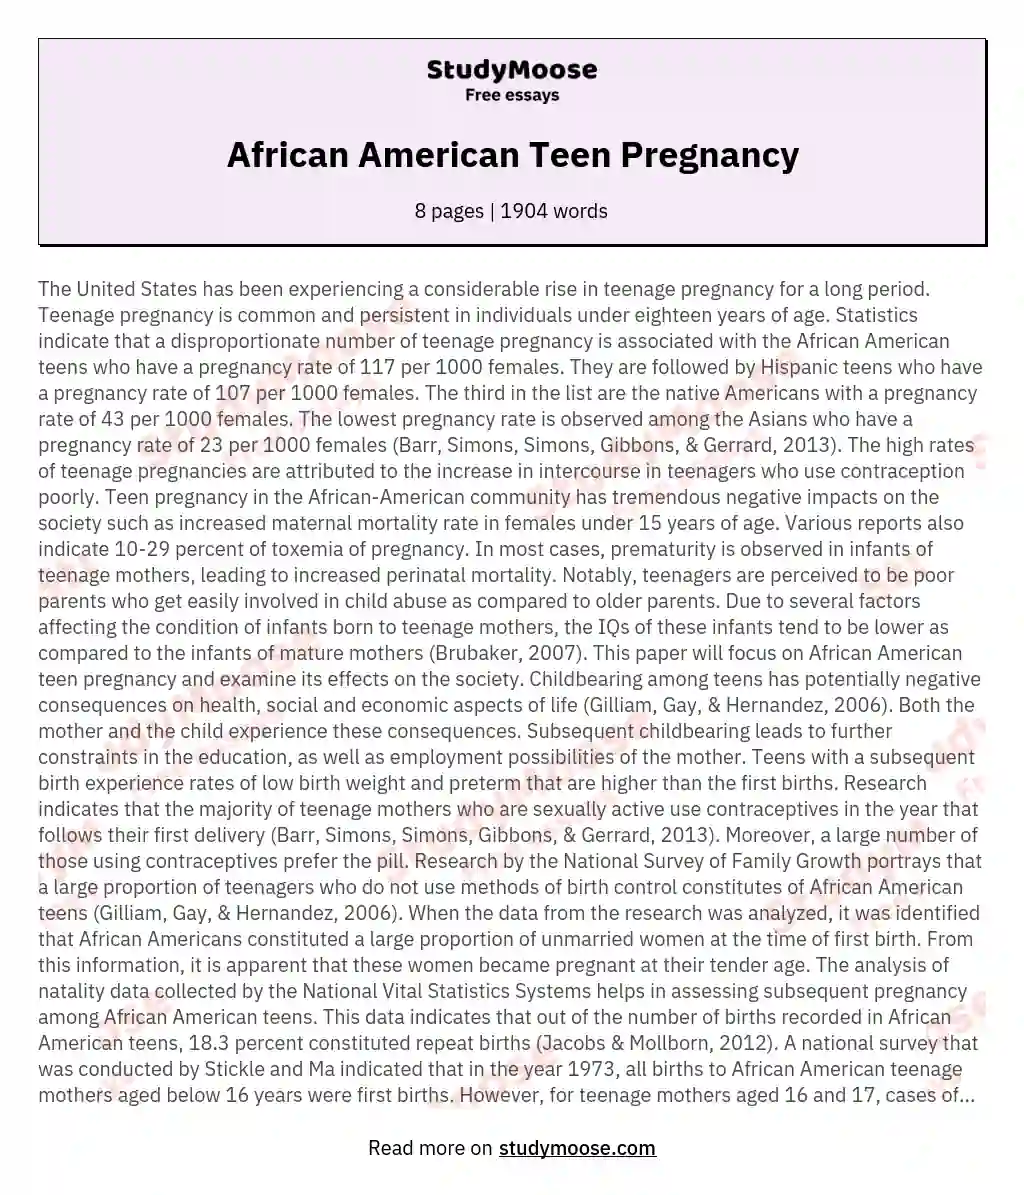 African American Teen Pregnancy essay